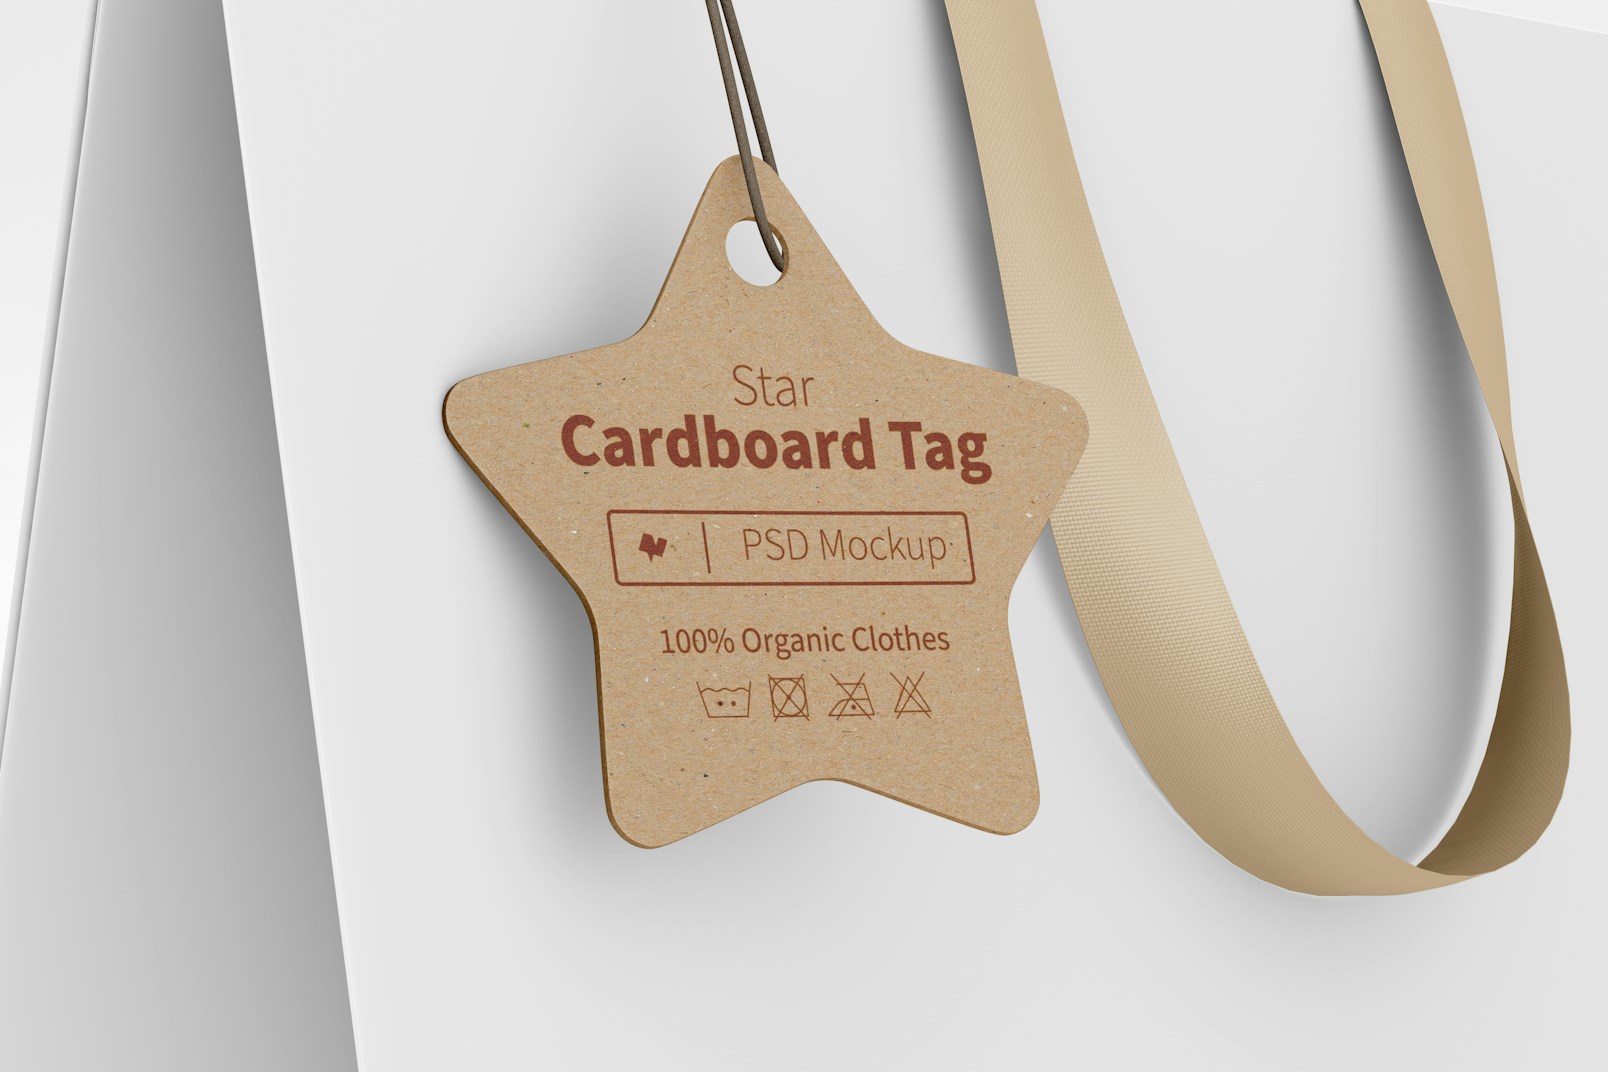 Star Cardboard Tag on Bag Mockup